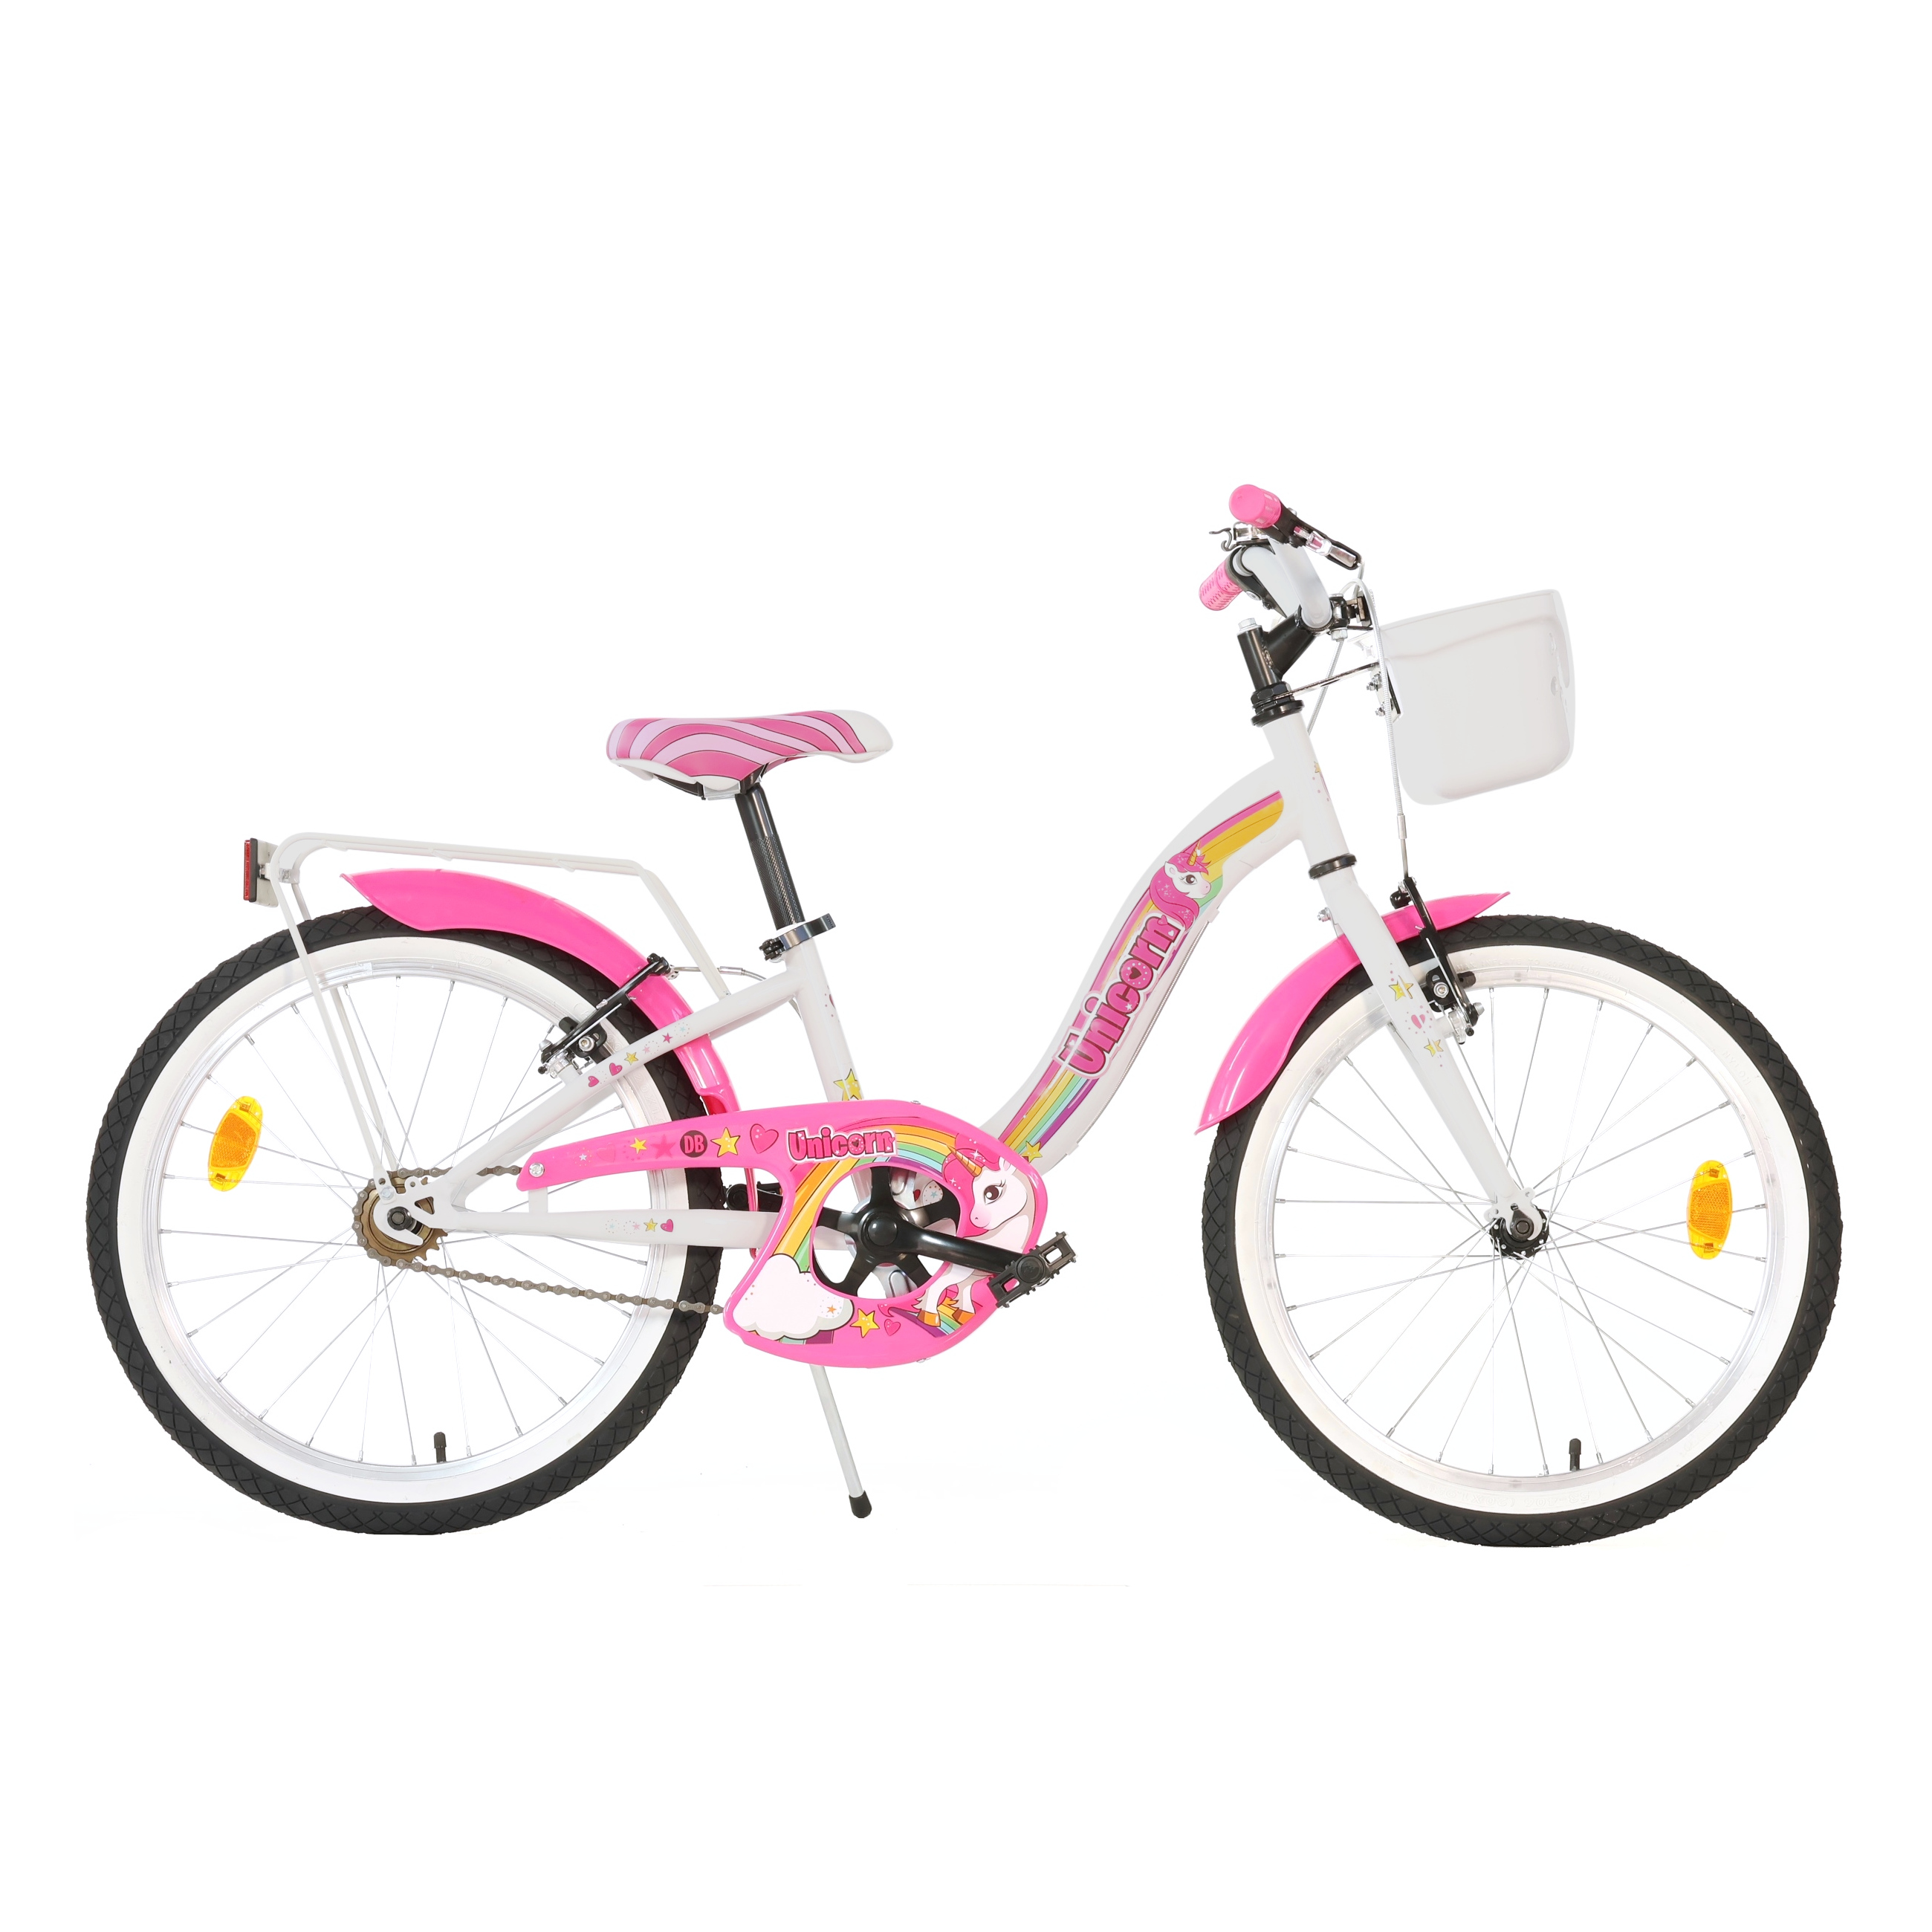 Bicicleta Niños 20 Pulgadas Unicorn Rosado 7 Años - rosa - 